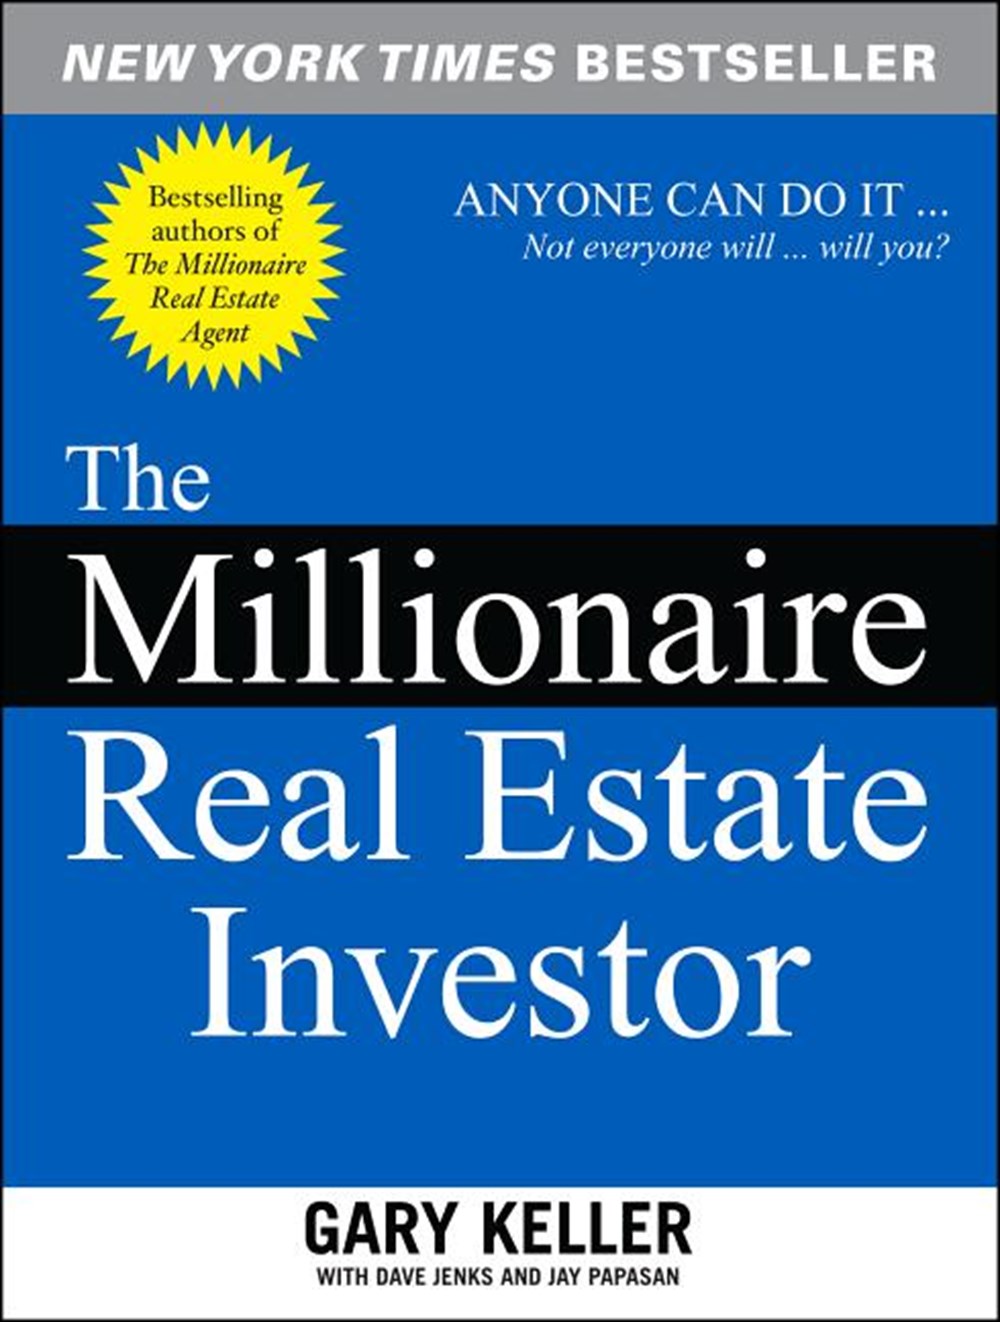 Millionaire Real Estate Investor